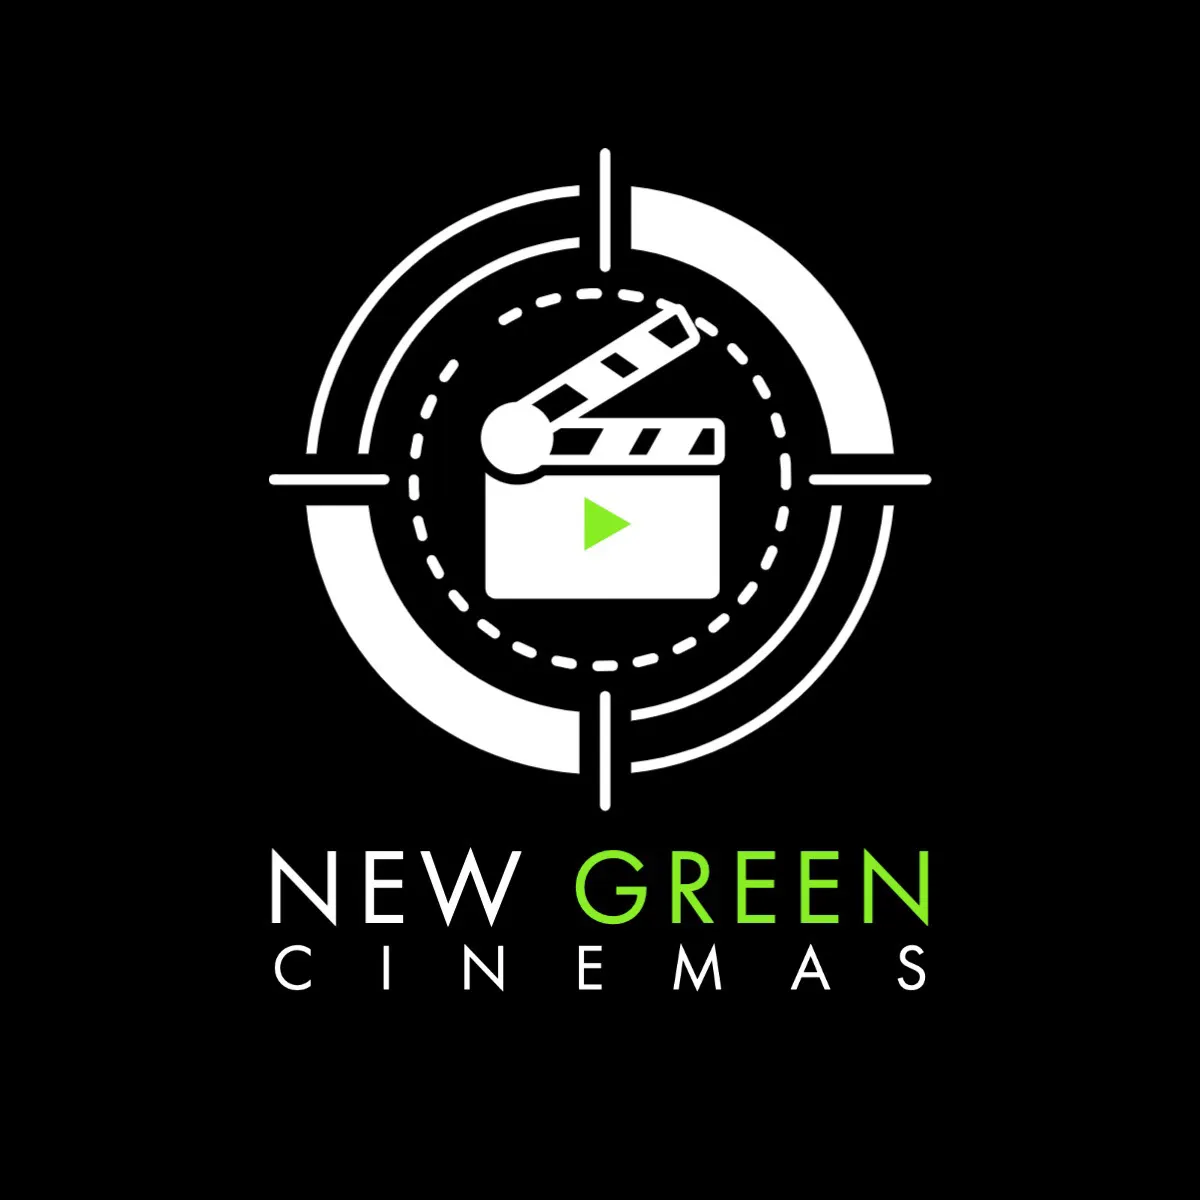 Free Movie Logo Maker Create Movie Logos Online In Minutes Adobe Spark